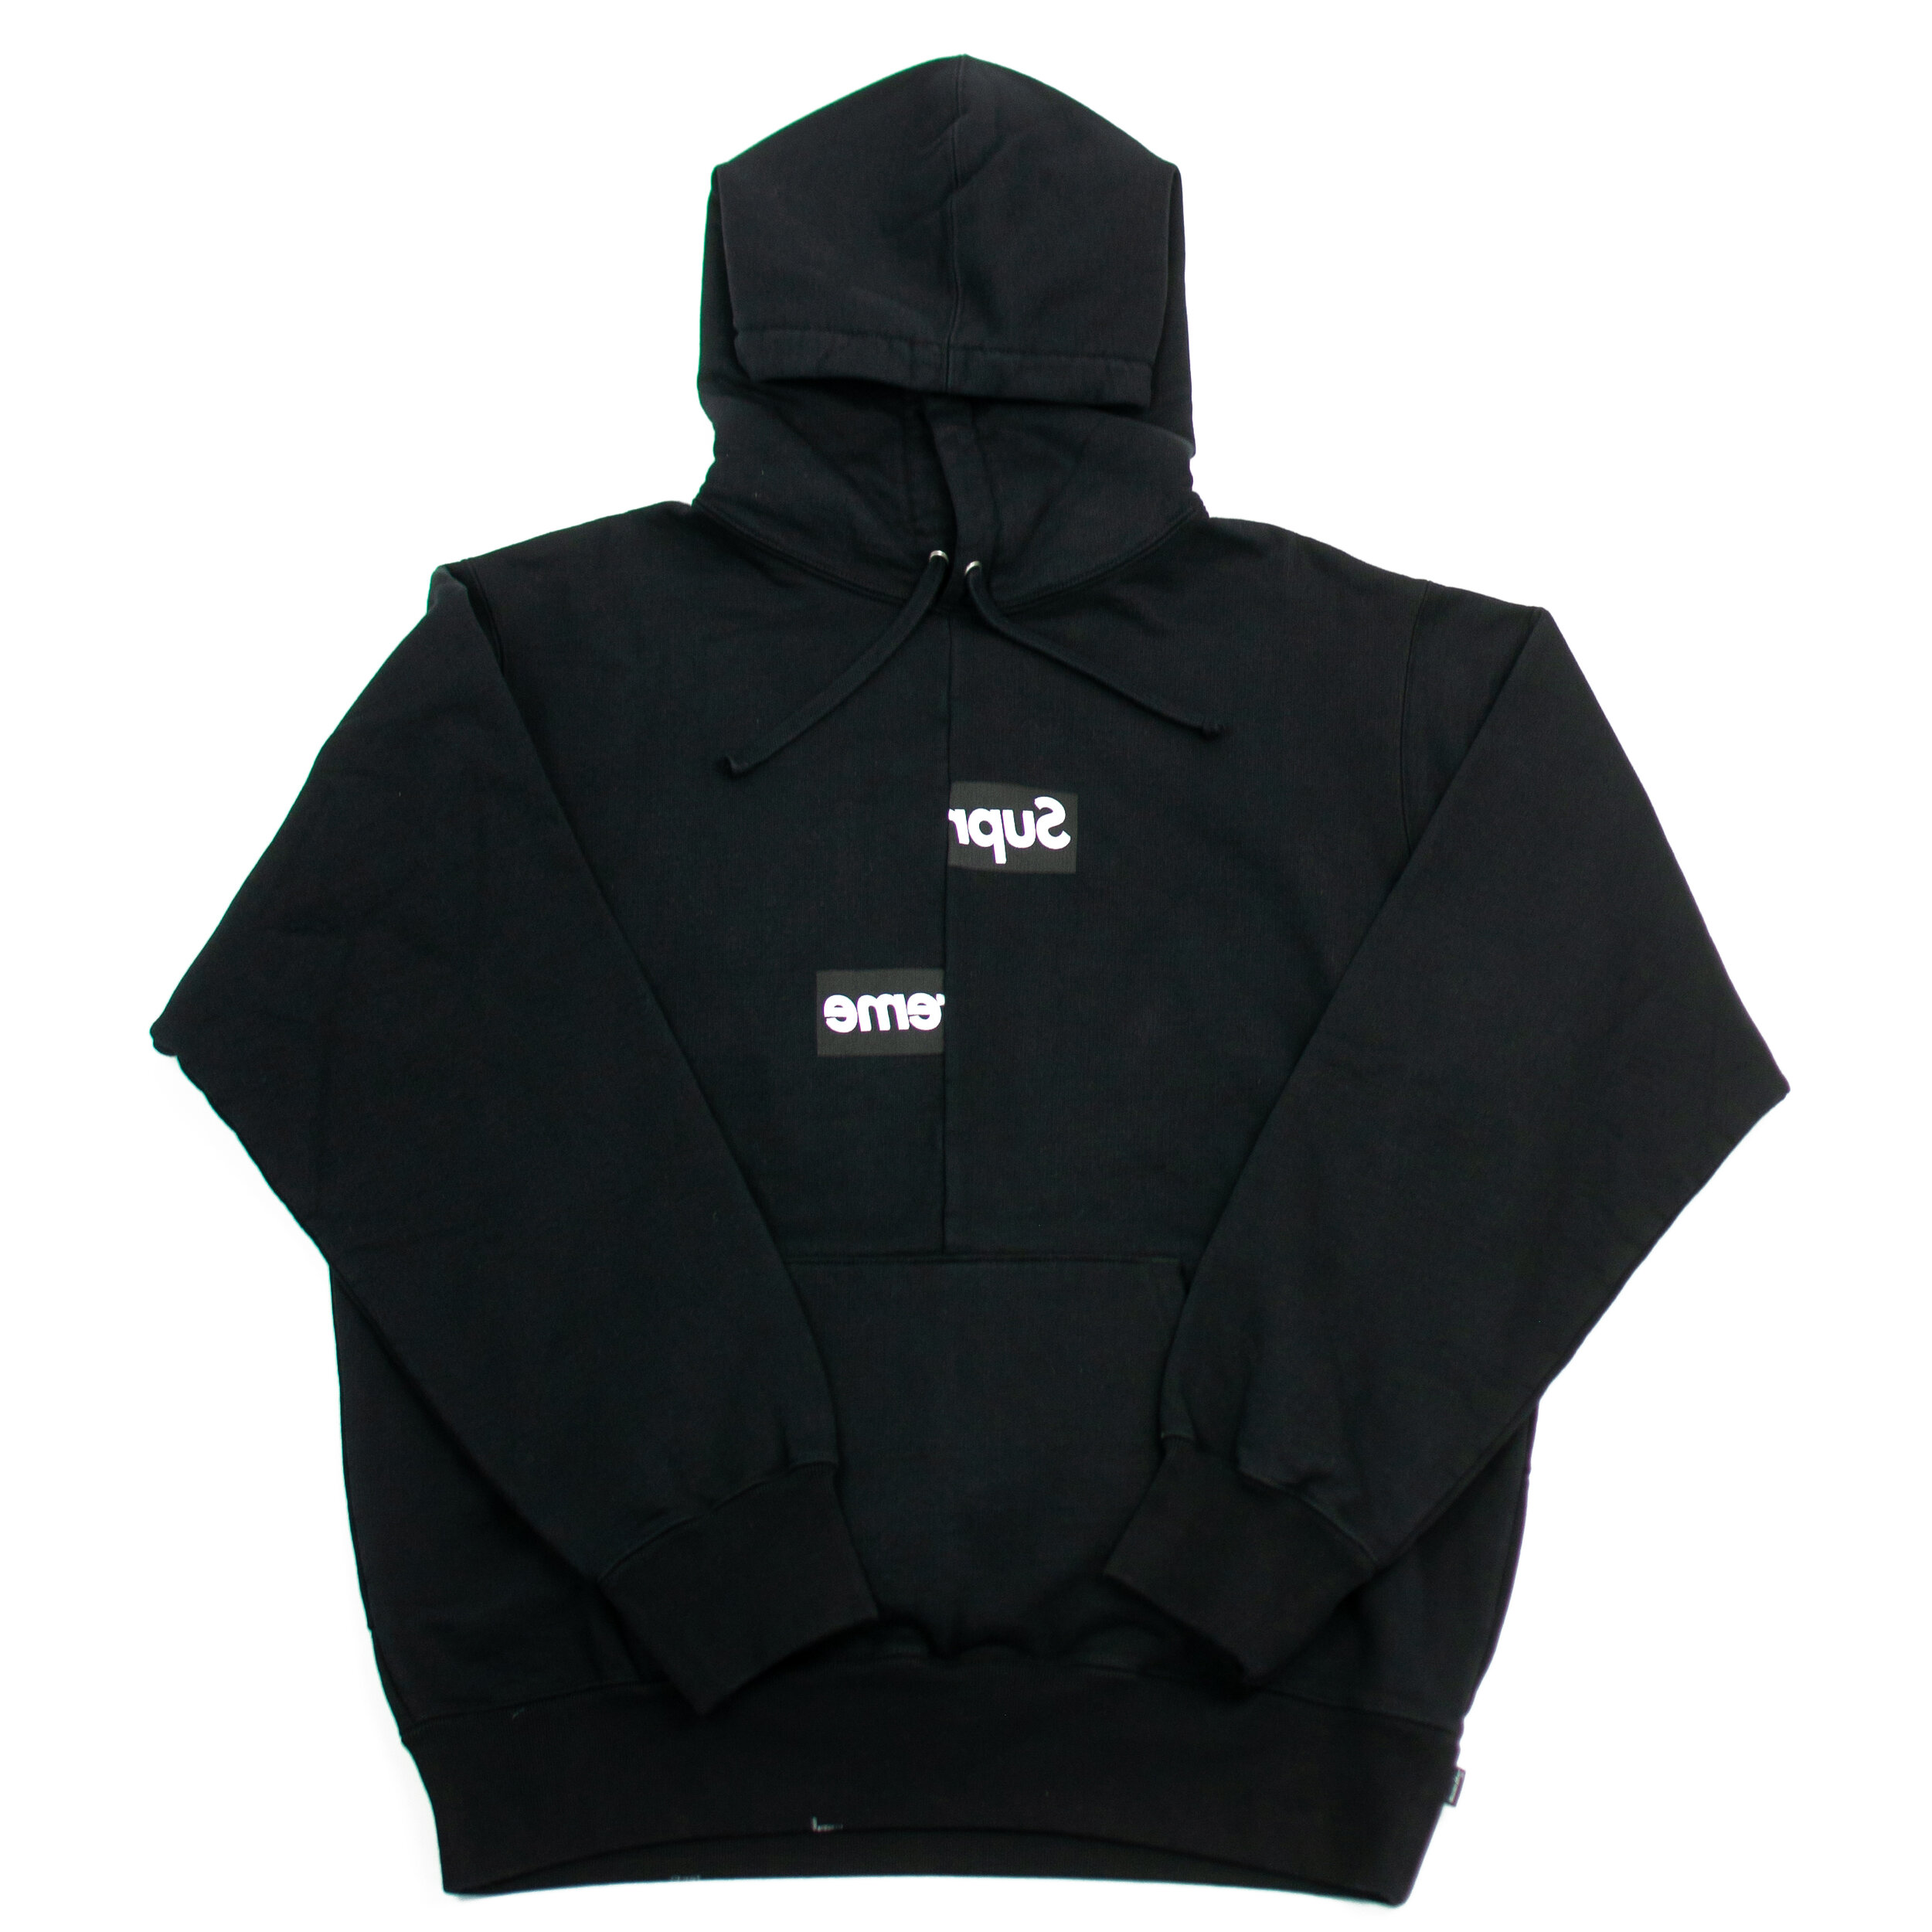 FW18 Supreme x COMME des Garçons Box Logo Sweatshirt Black — The